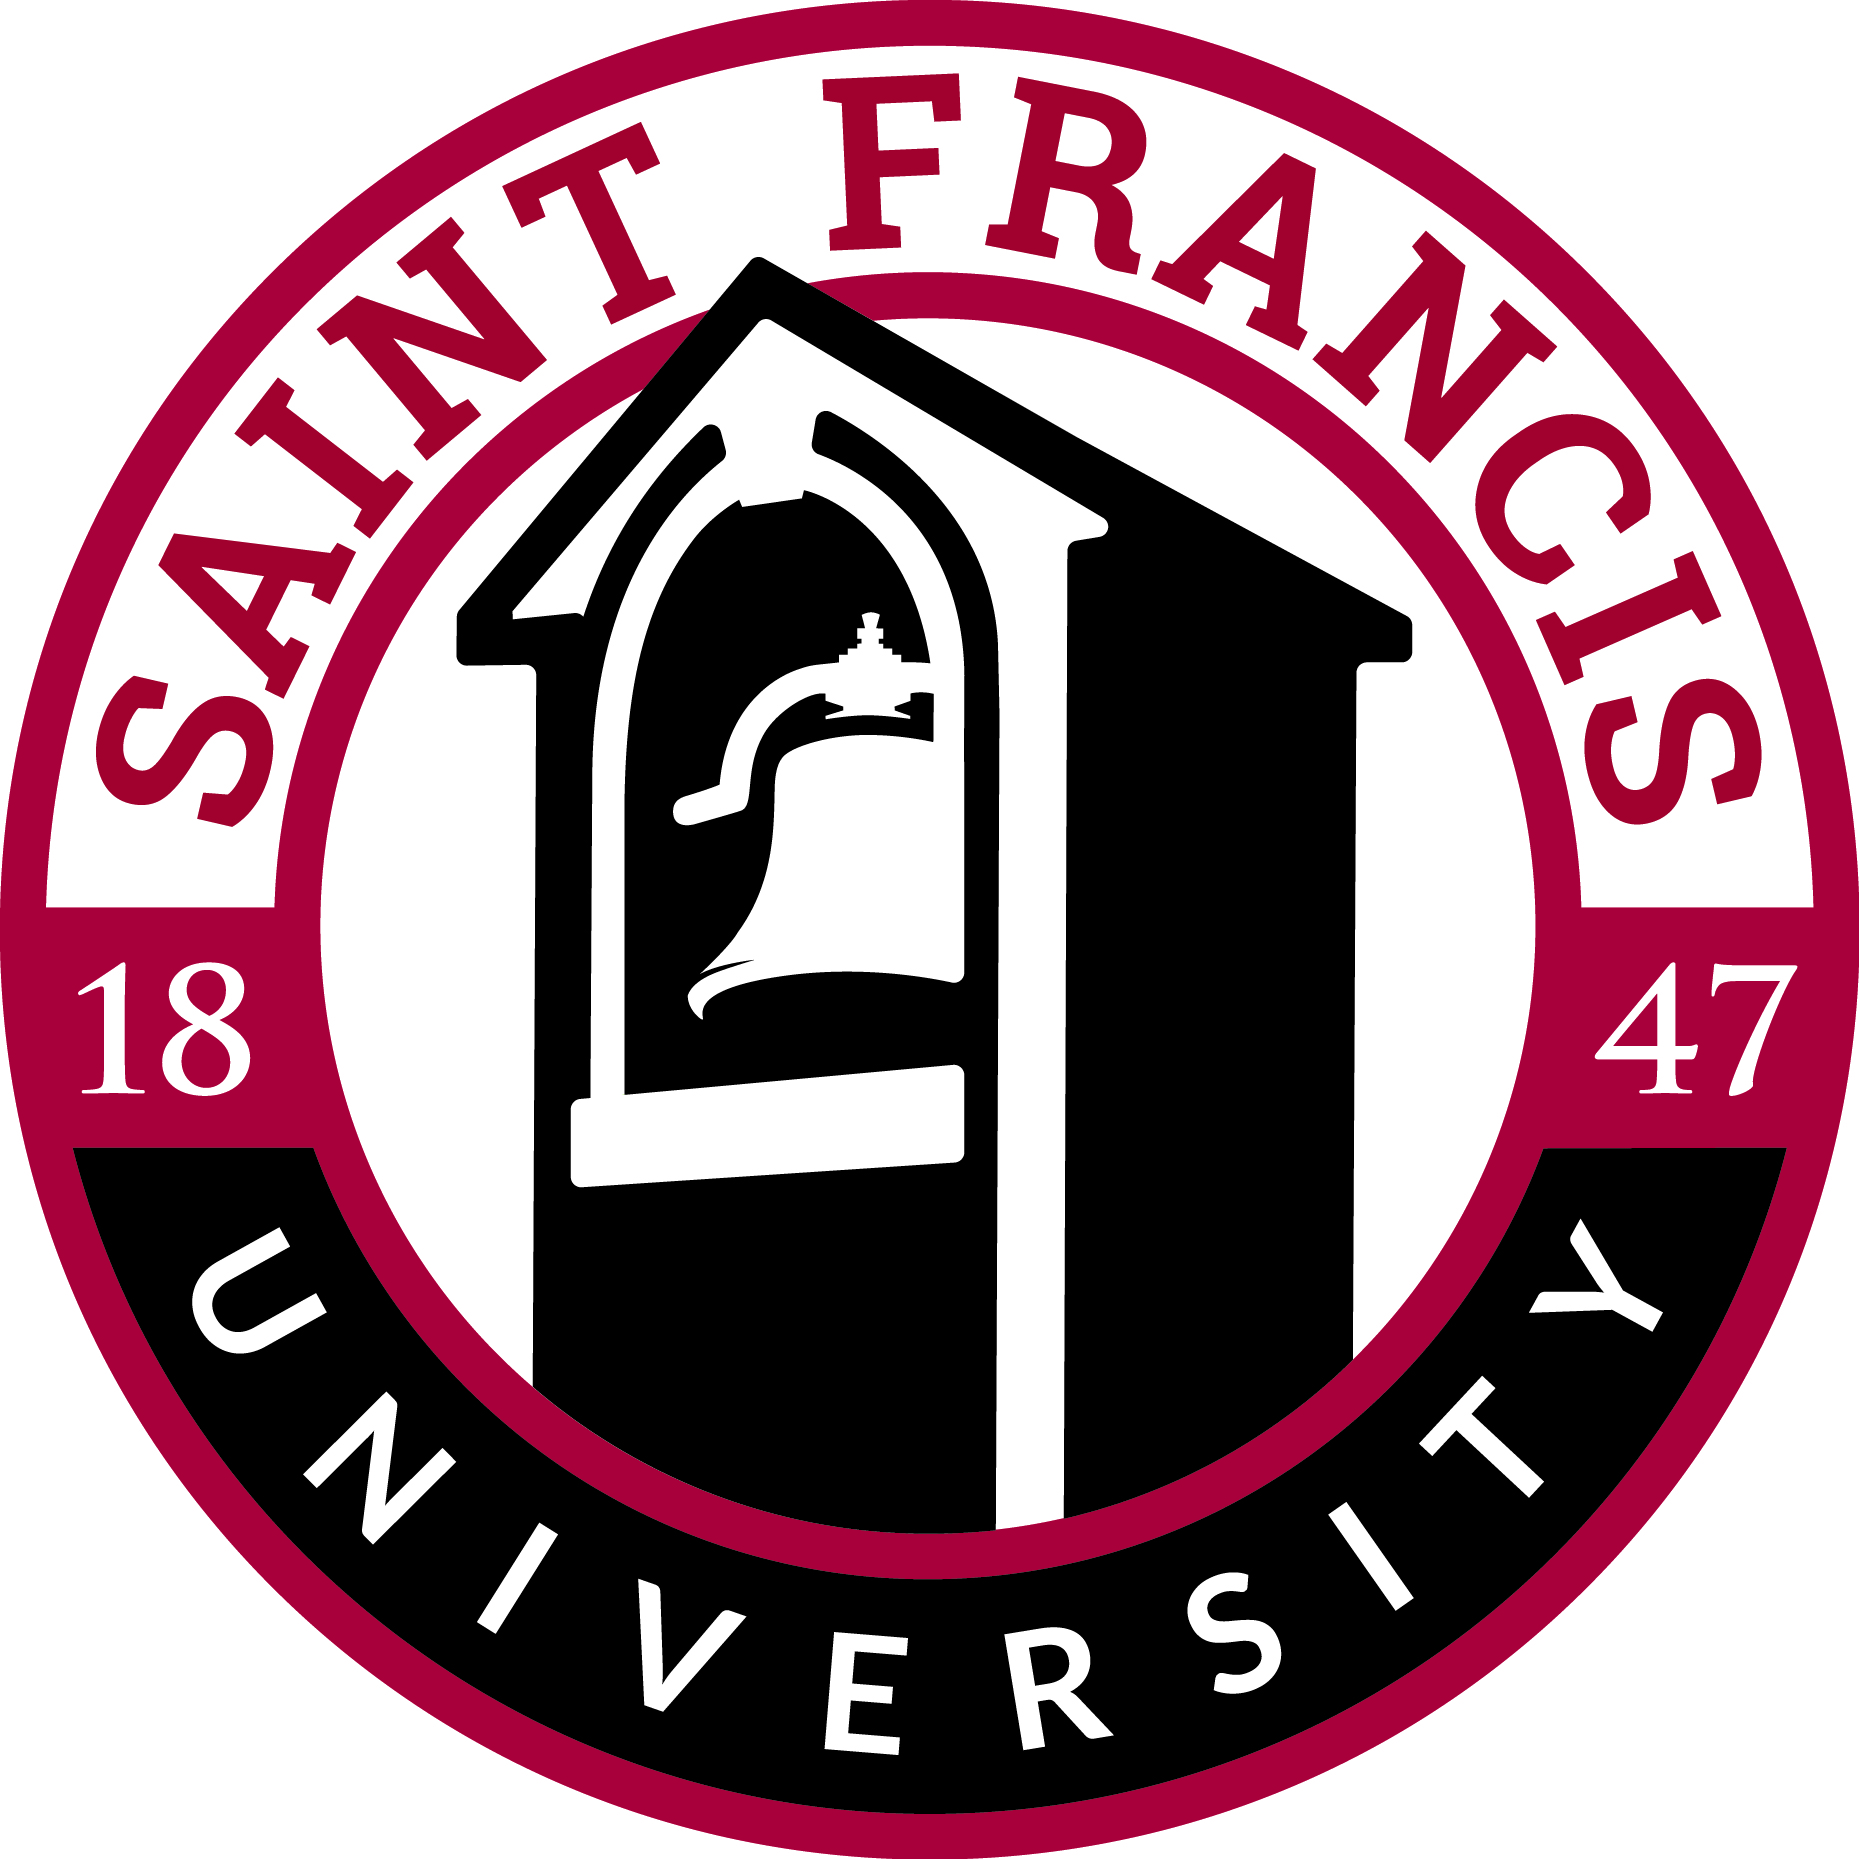 Saint Francis University